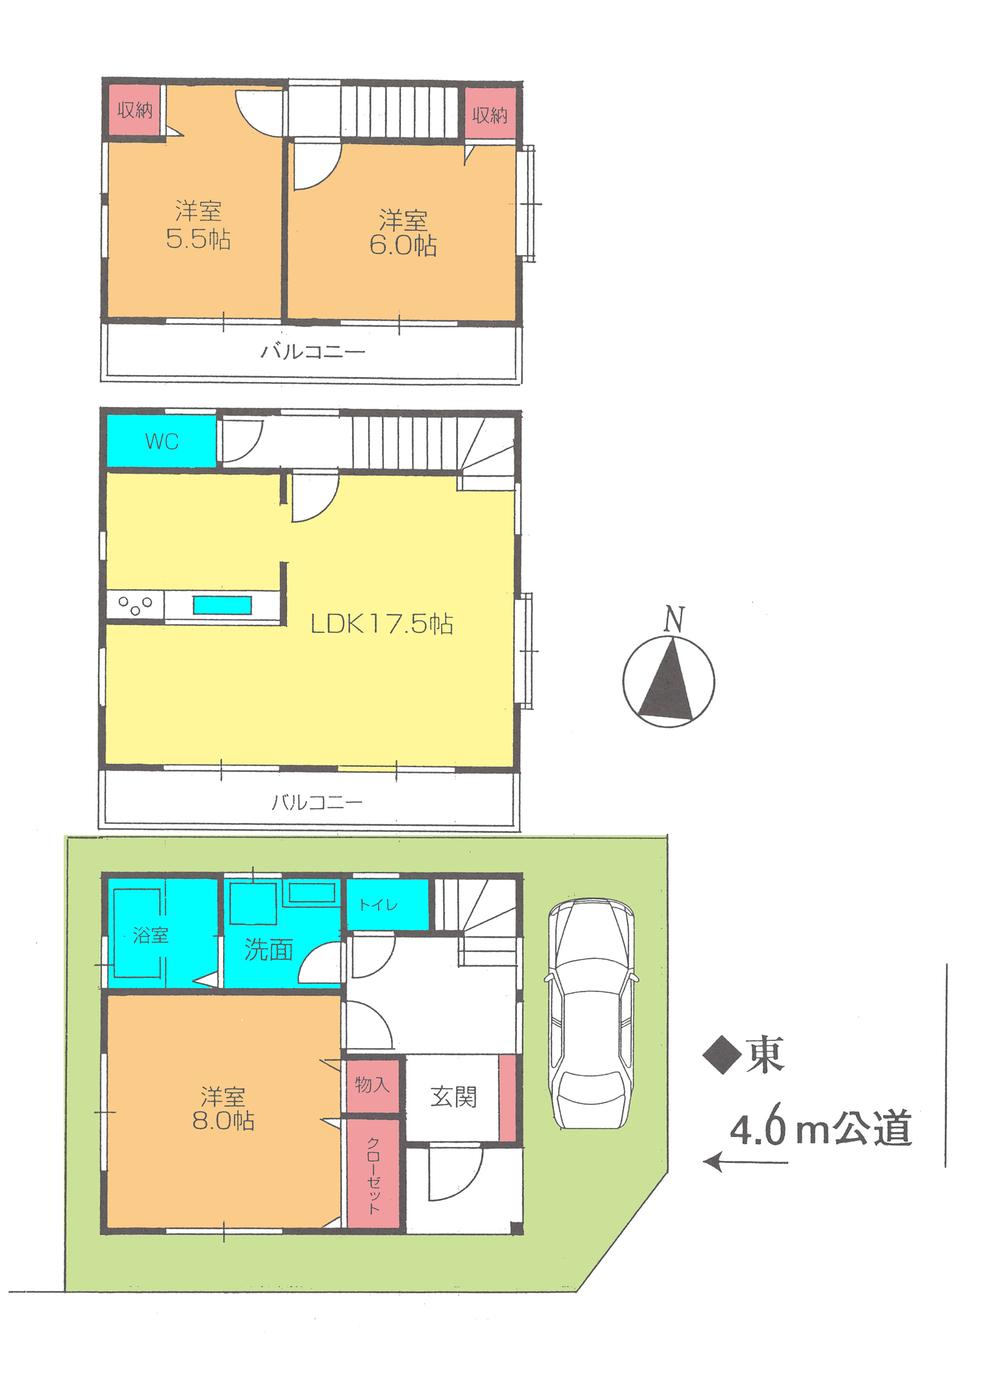 Building plan example (floor plan). Building plan example: newly built wooden three-story, Building price 14 million yen, Building area 90 sq m , 3LDK